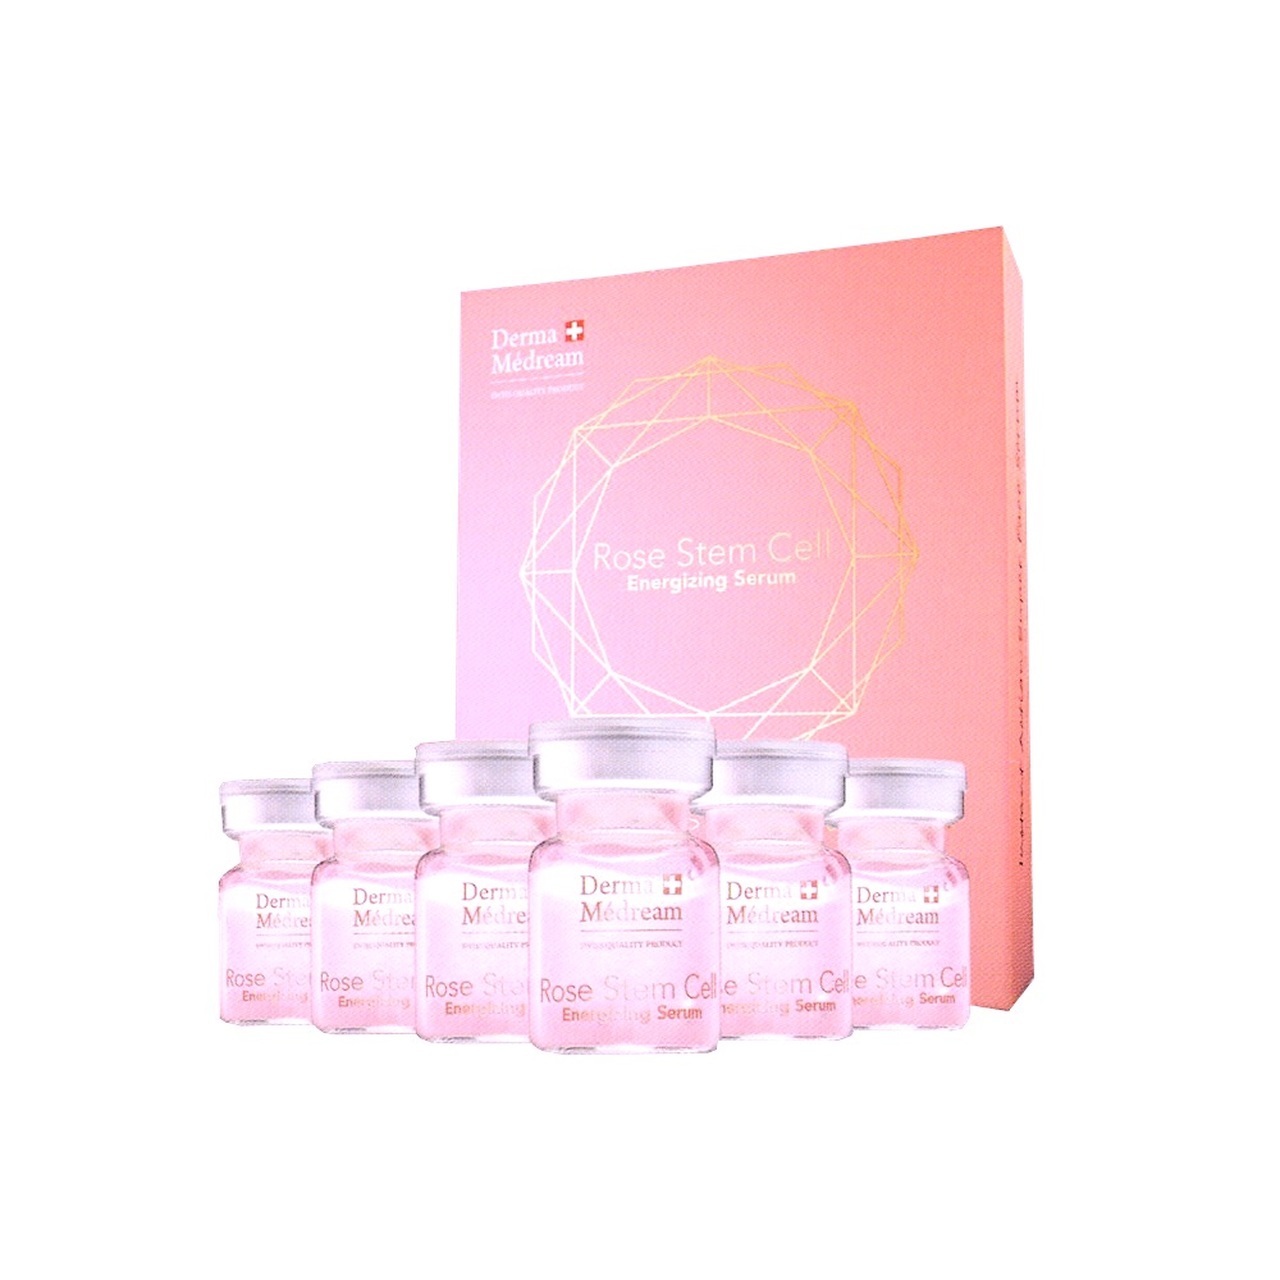 Derma Medream Rose Stem Cell Energizing Serum (5ml x 6 bottles / box)